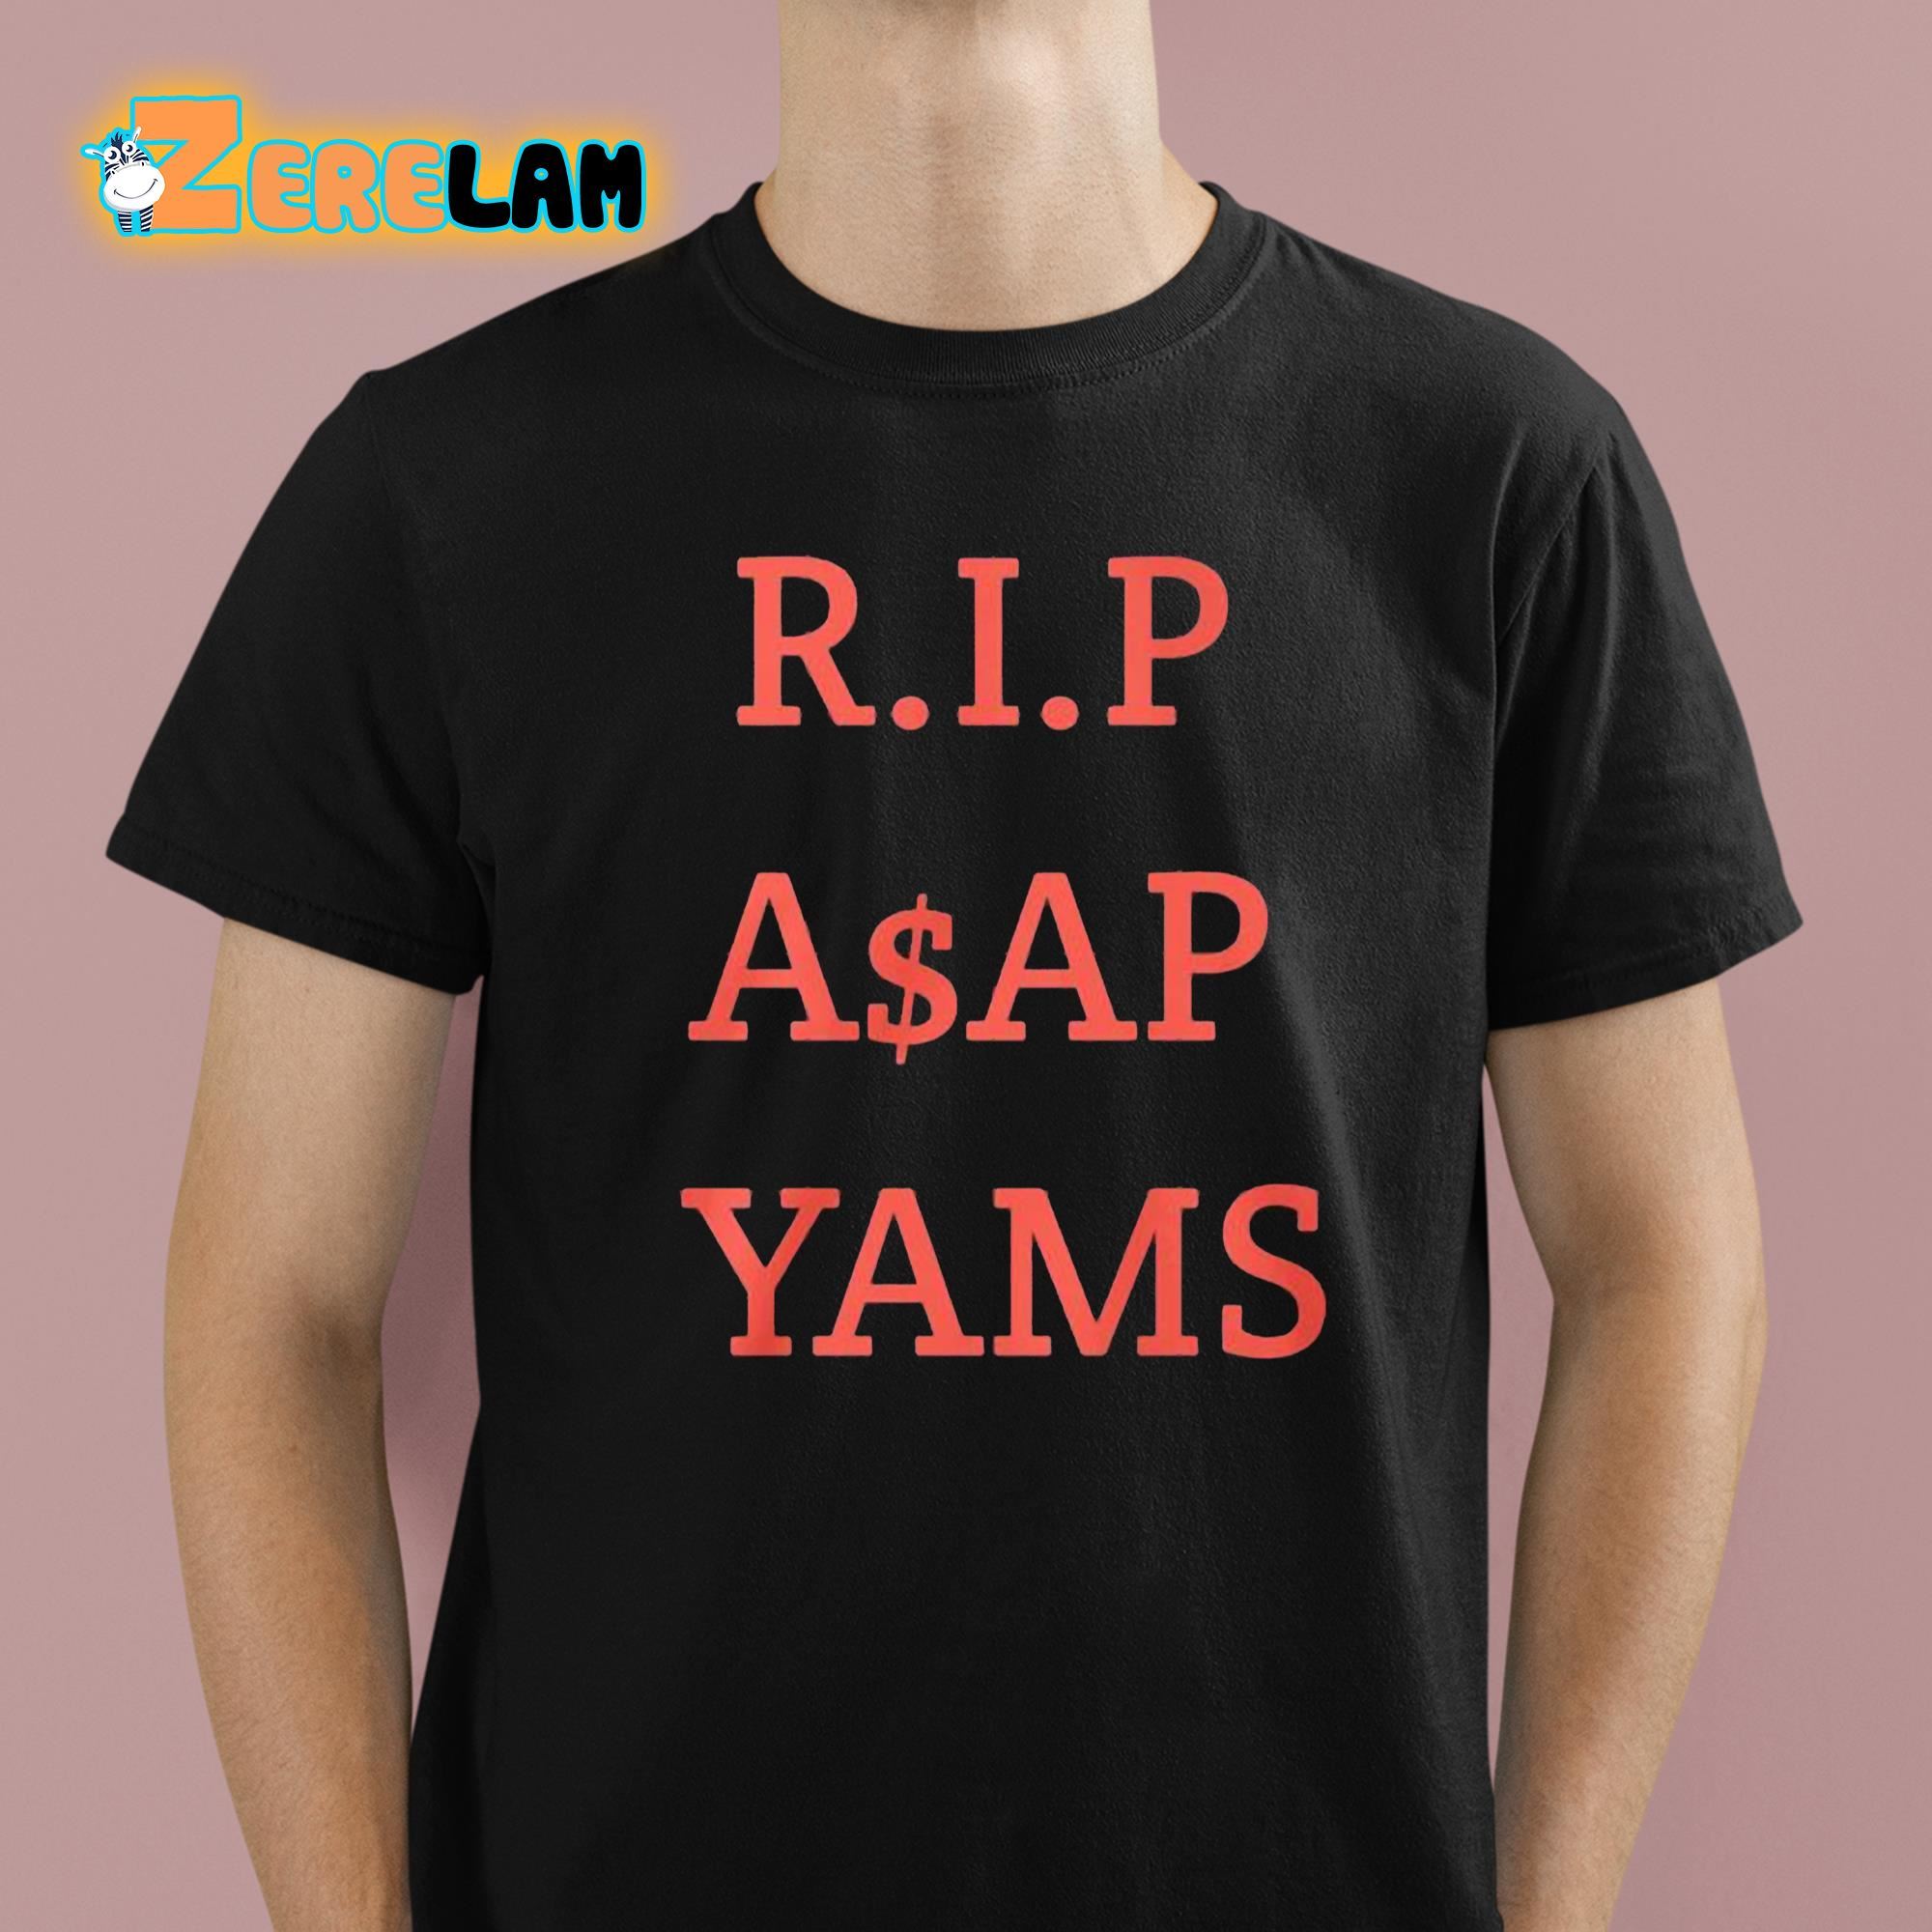 Rip Asap Yams Always Strive And Prosper Shirt 1 1